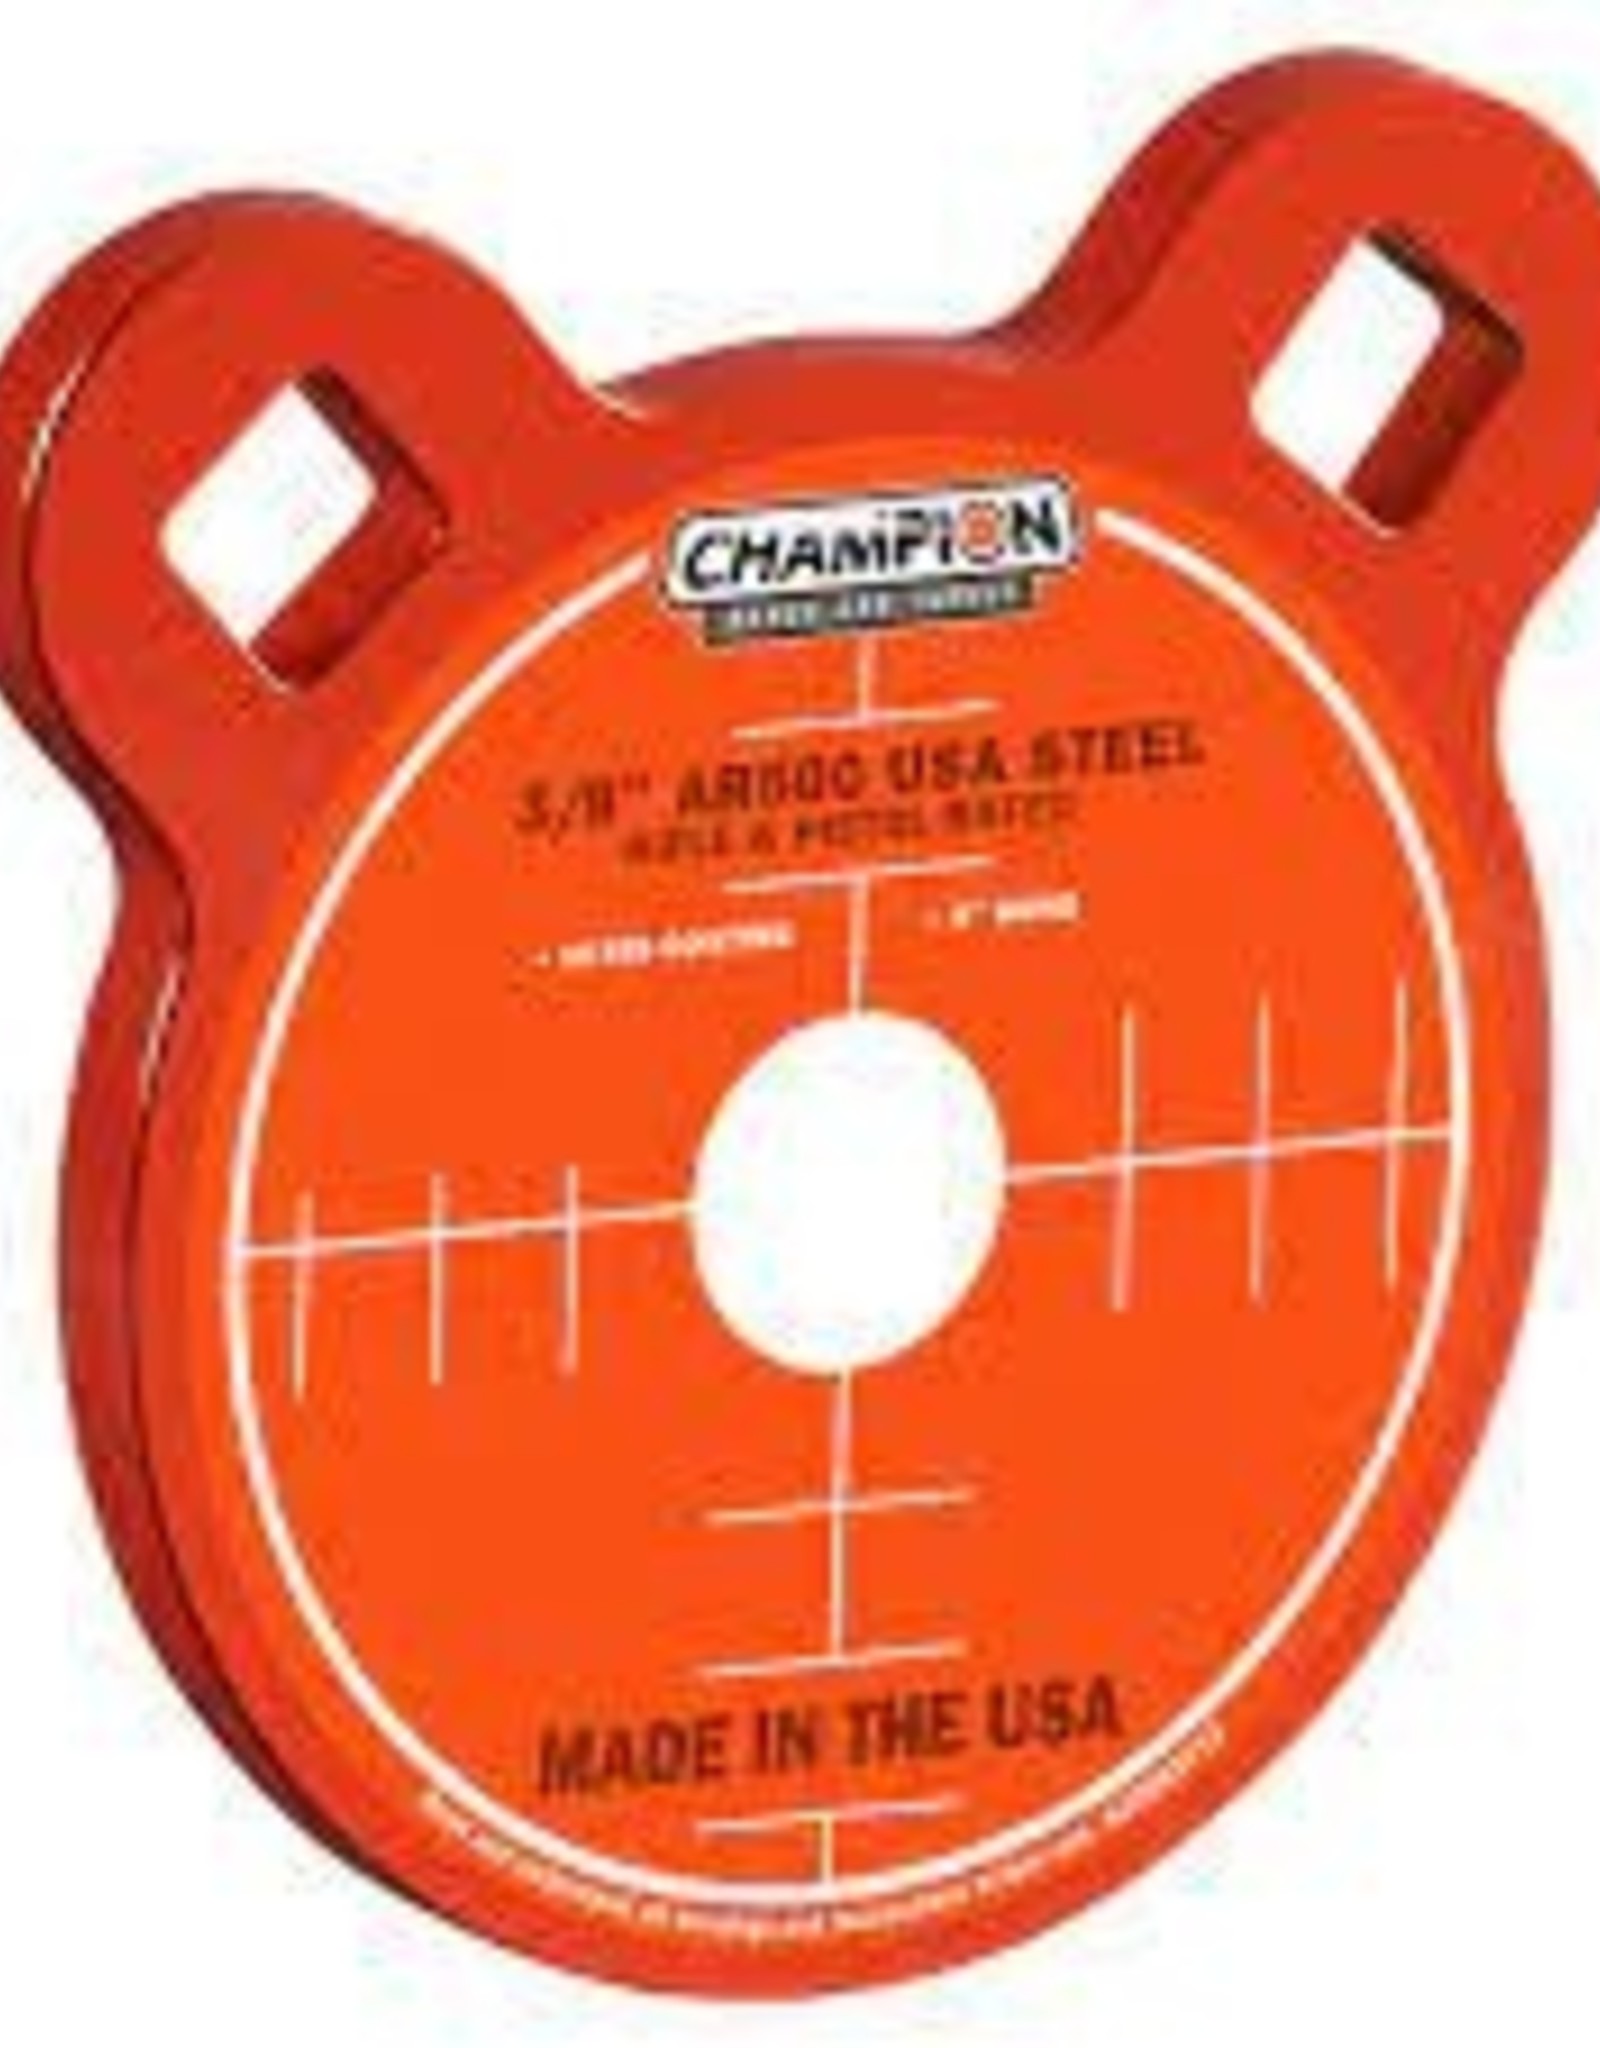 Champion 3/8" AR500 USA Steel